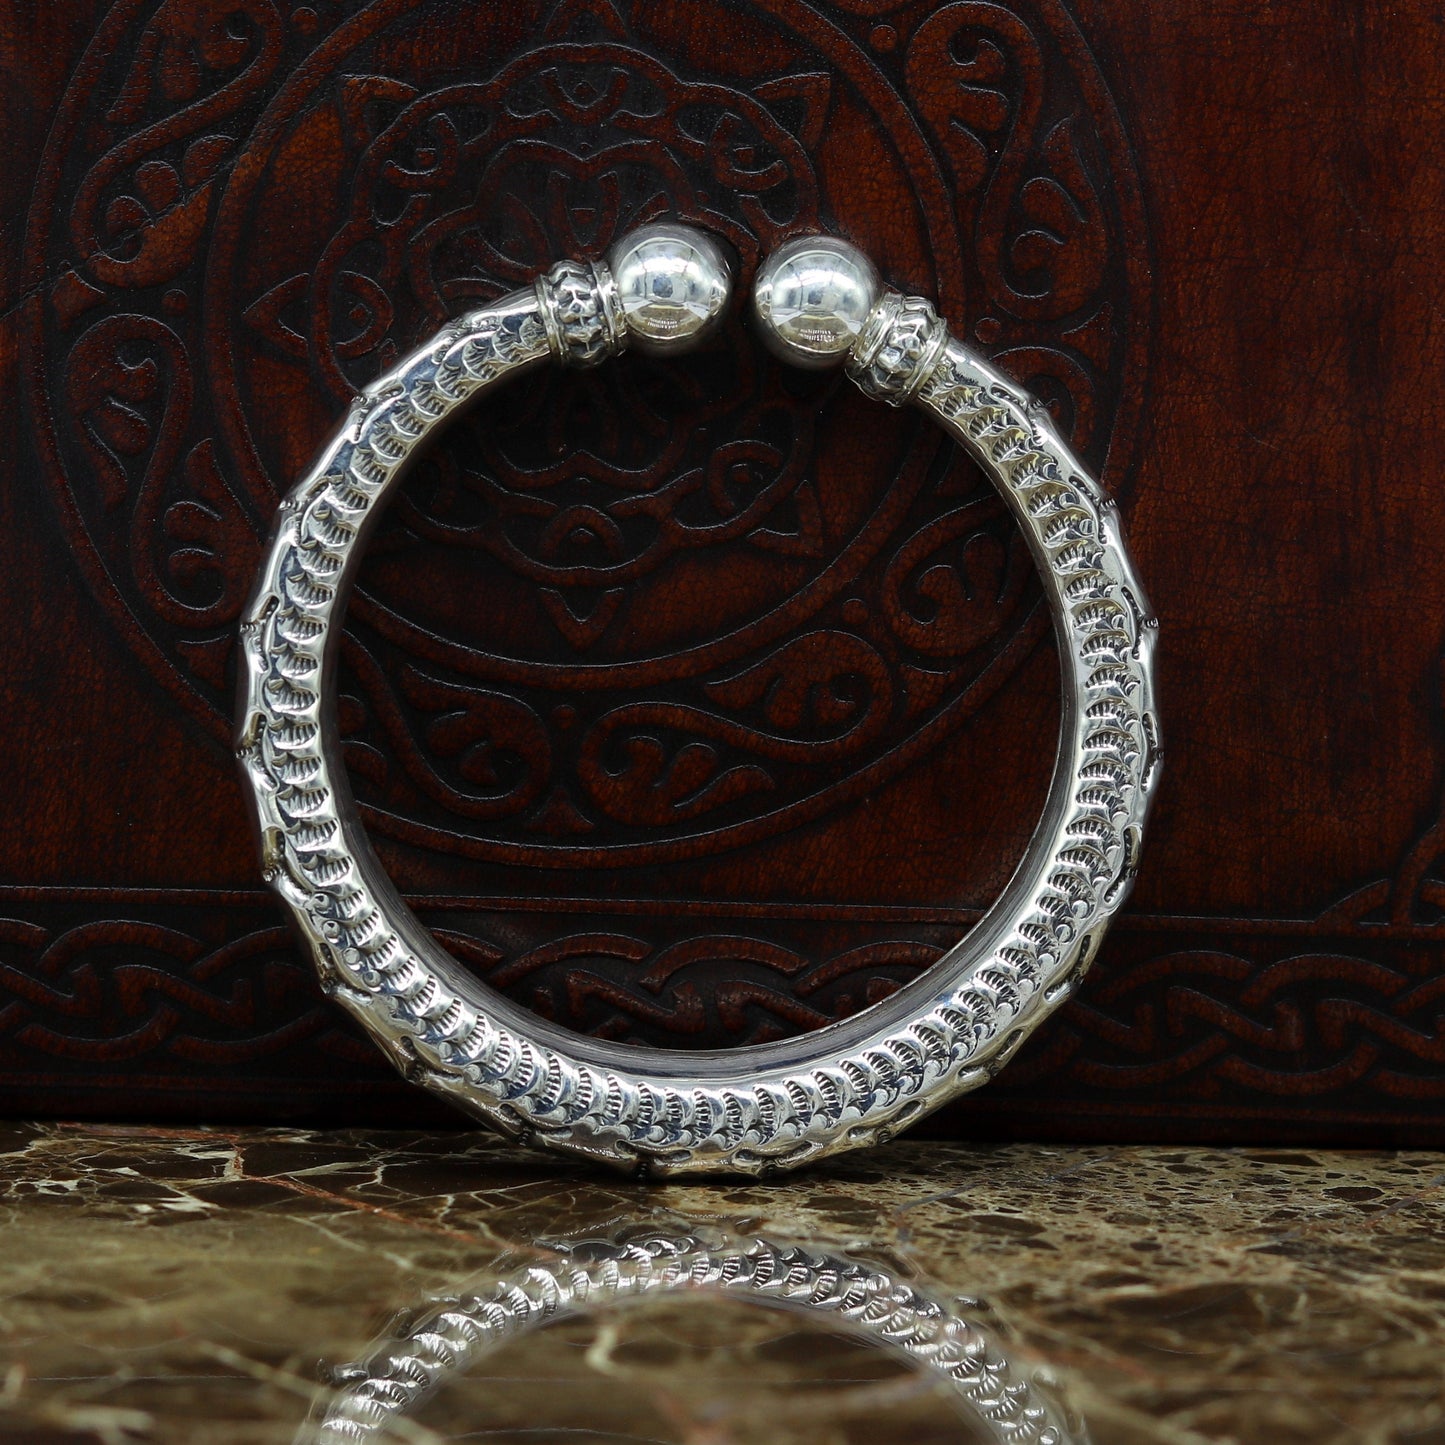 925 sterling silver handmade gorgeous customized work bangle bracelet kada, vintage antique design stylish bangle unisex jewelry nsk330 - TRIBAL ORNAMENTS